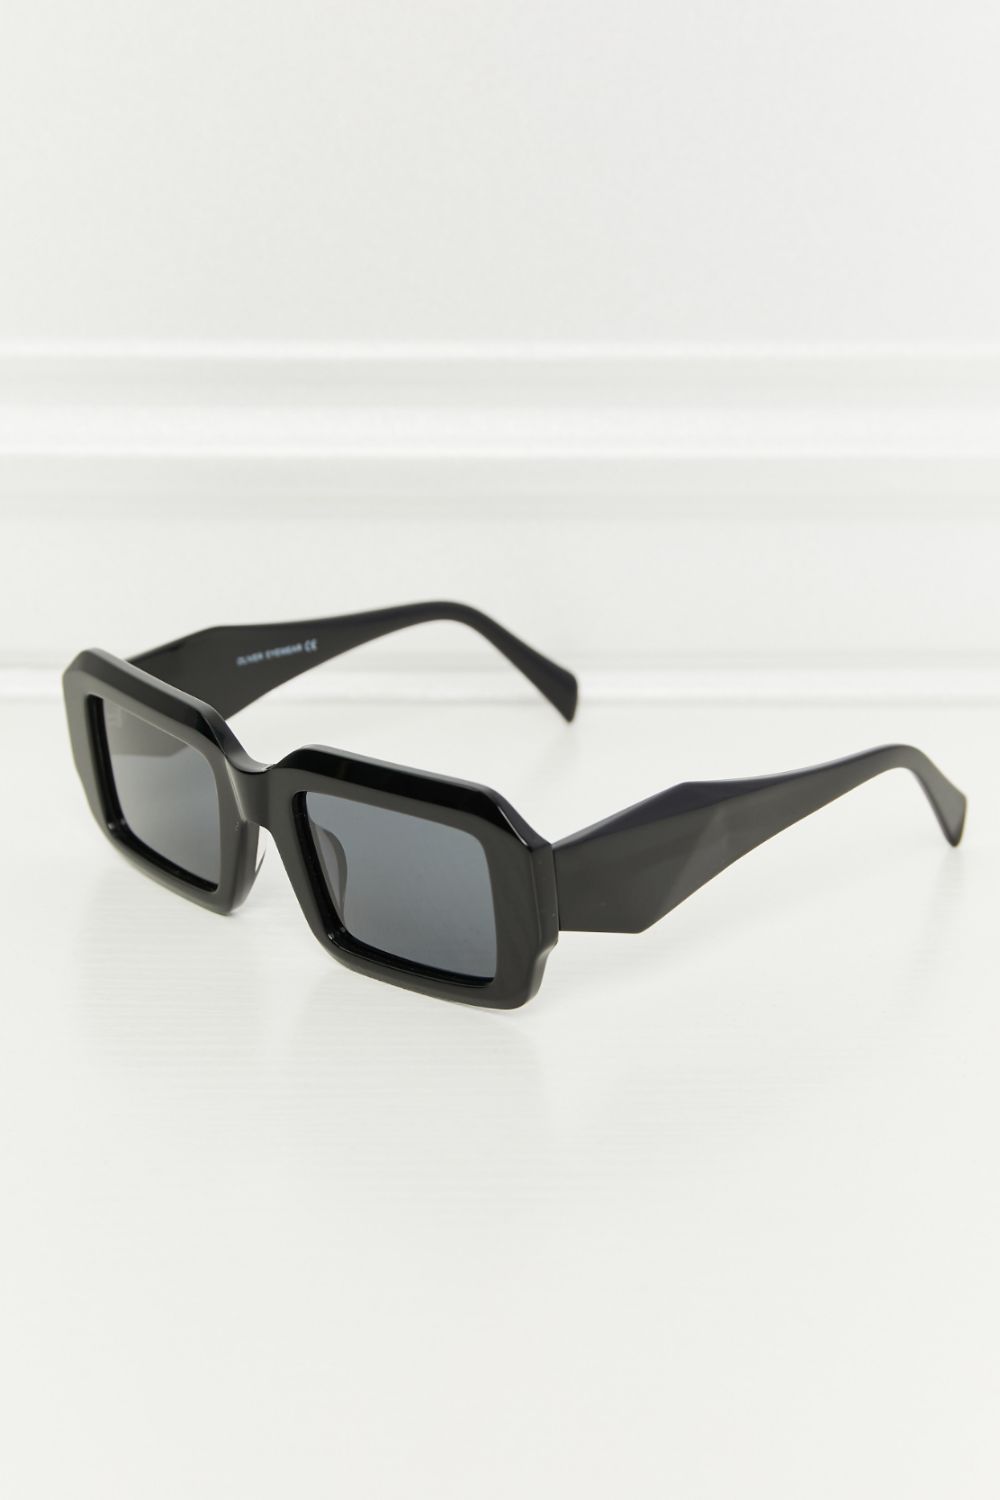 Rectangle TAC Polarization Lens Full Rim Sunglasses - BEAUTY COSMOTICS SHOP